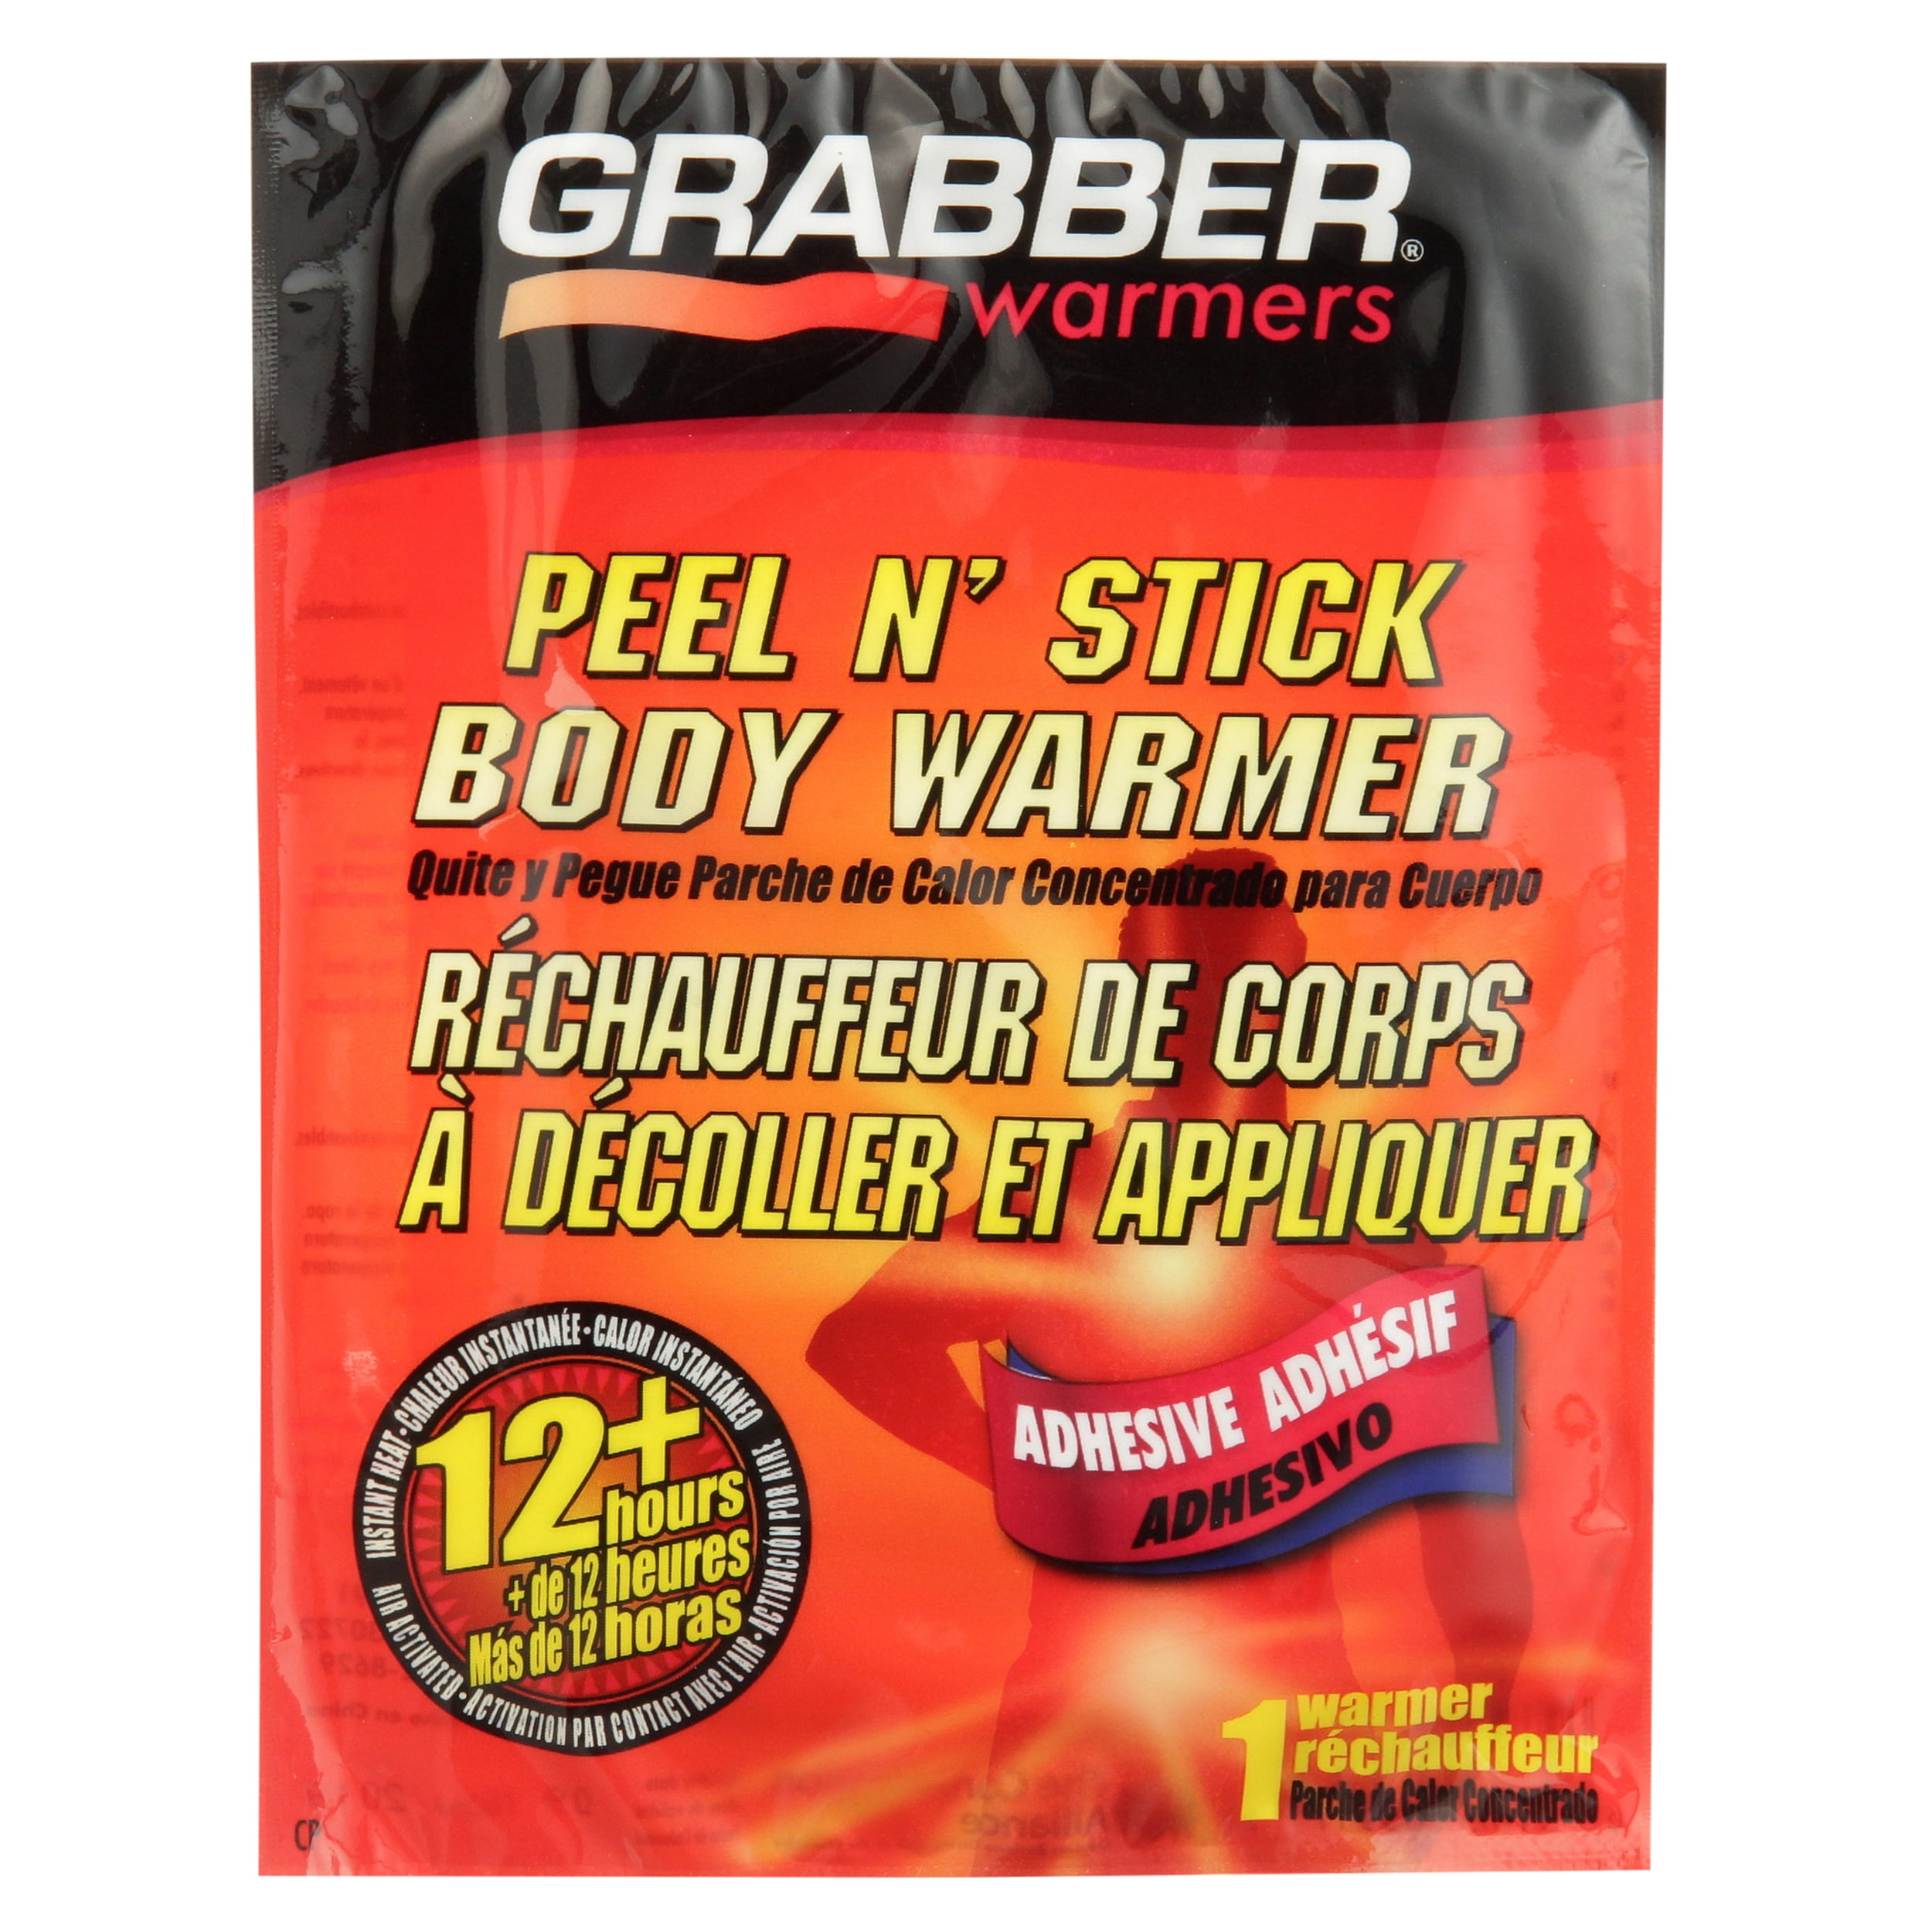 Grabber Warmers AWES 6 Pack 12 Hour Peel N Stick Body Warmer 